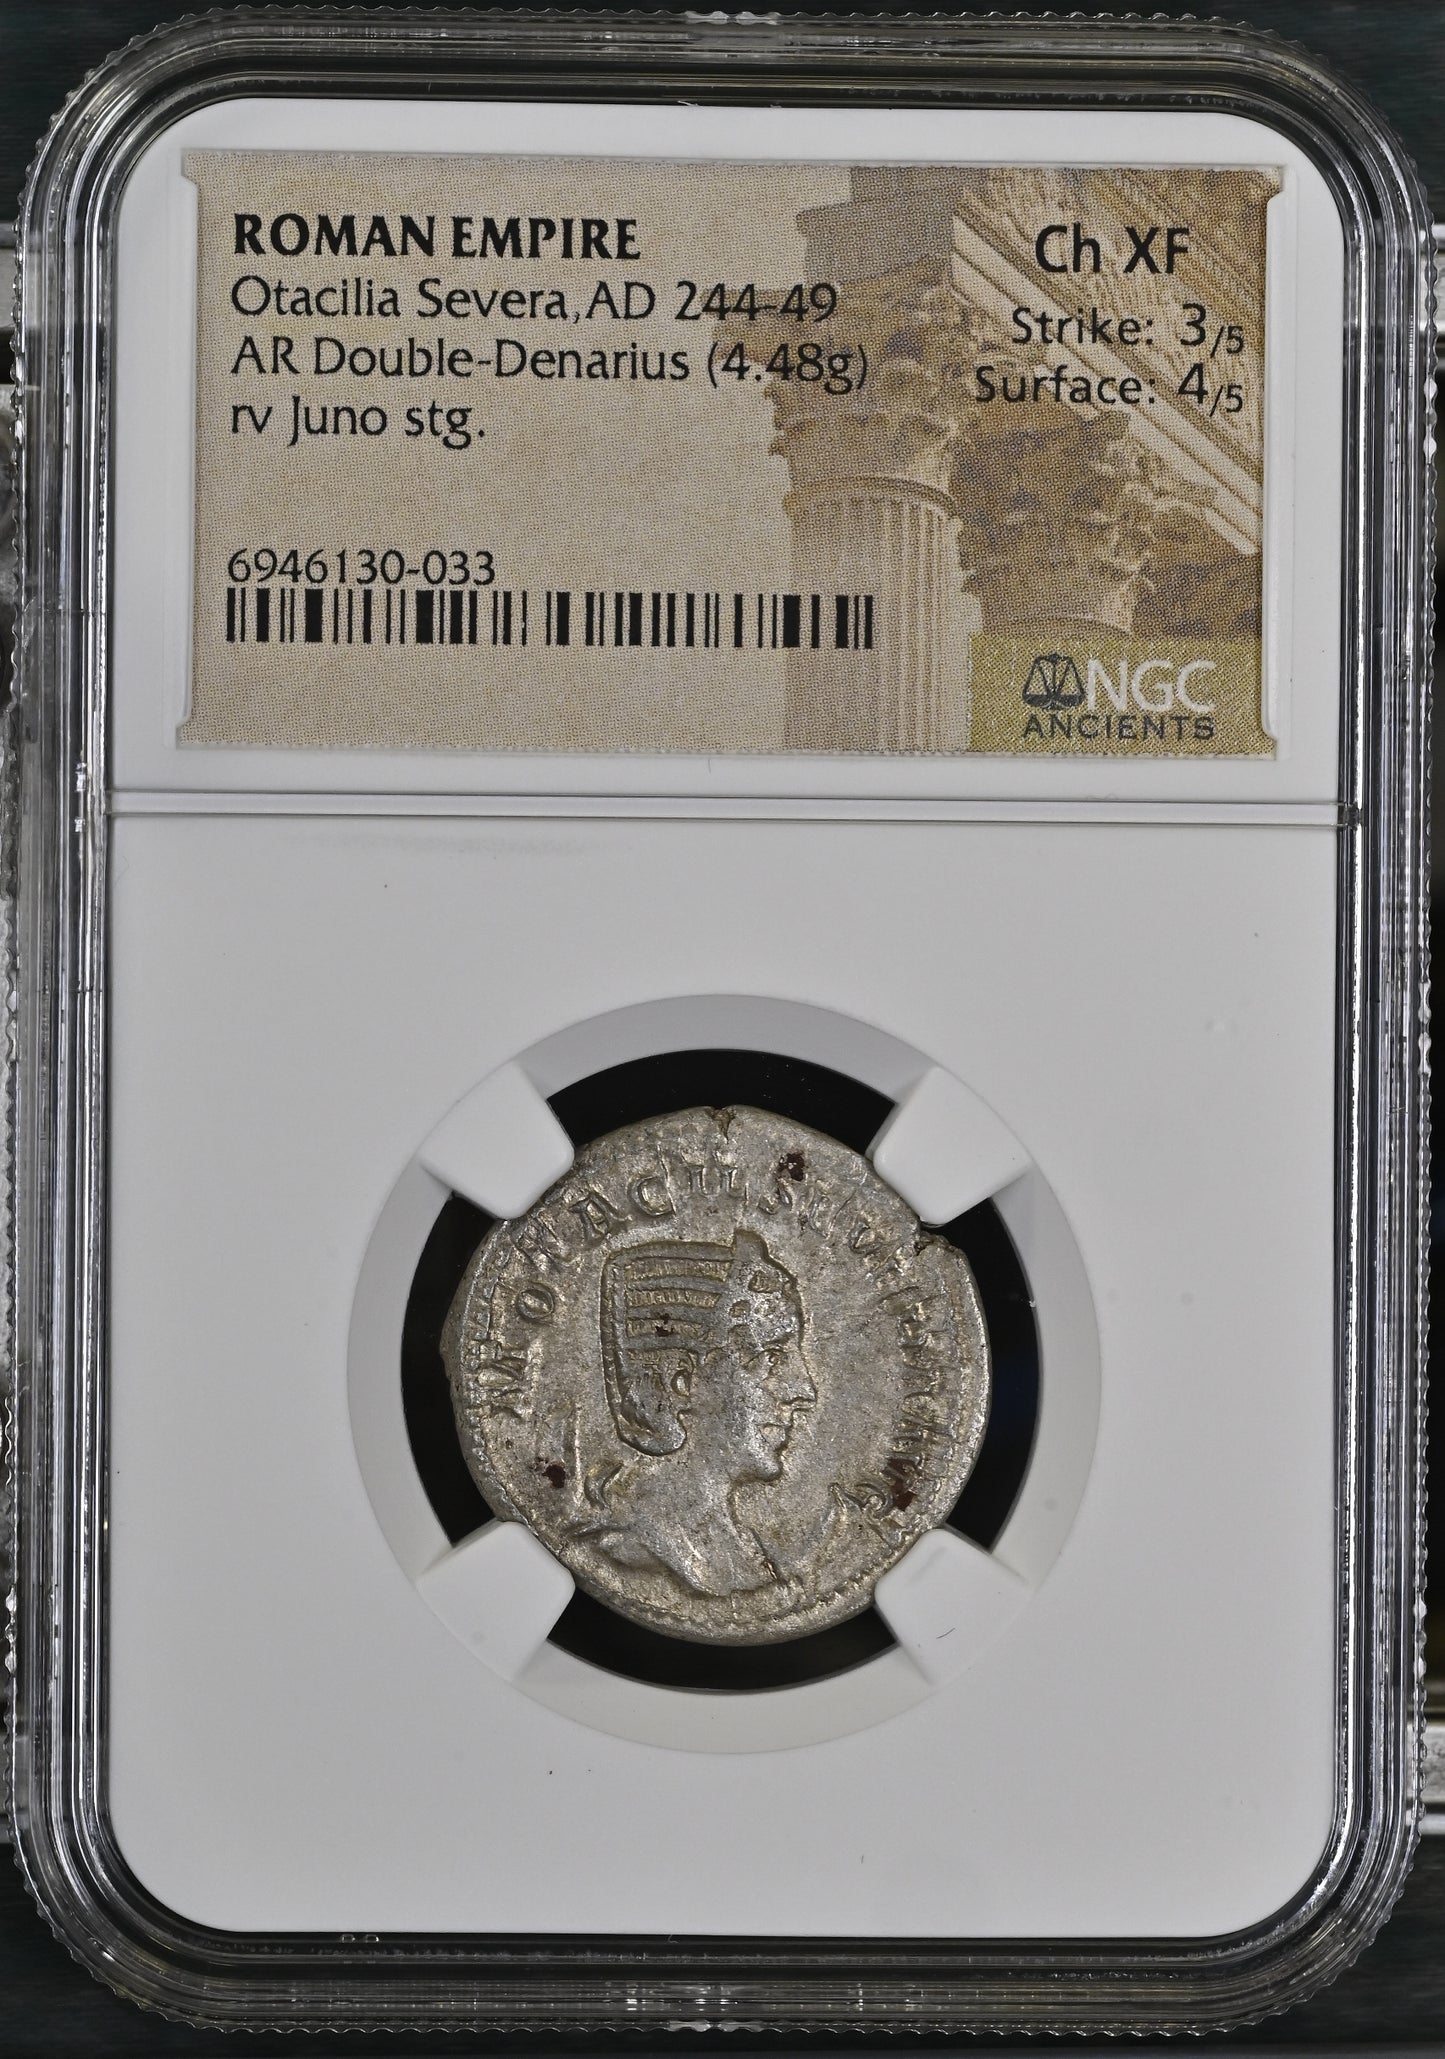 Roman Empire - Otacilia Severa - Silver Double-Denarius - NGC Ch XF - RIC:127